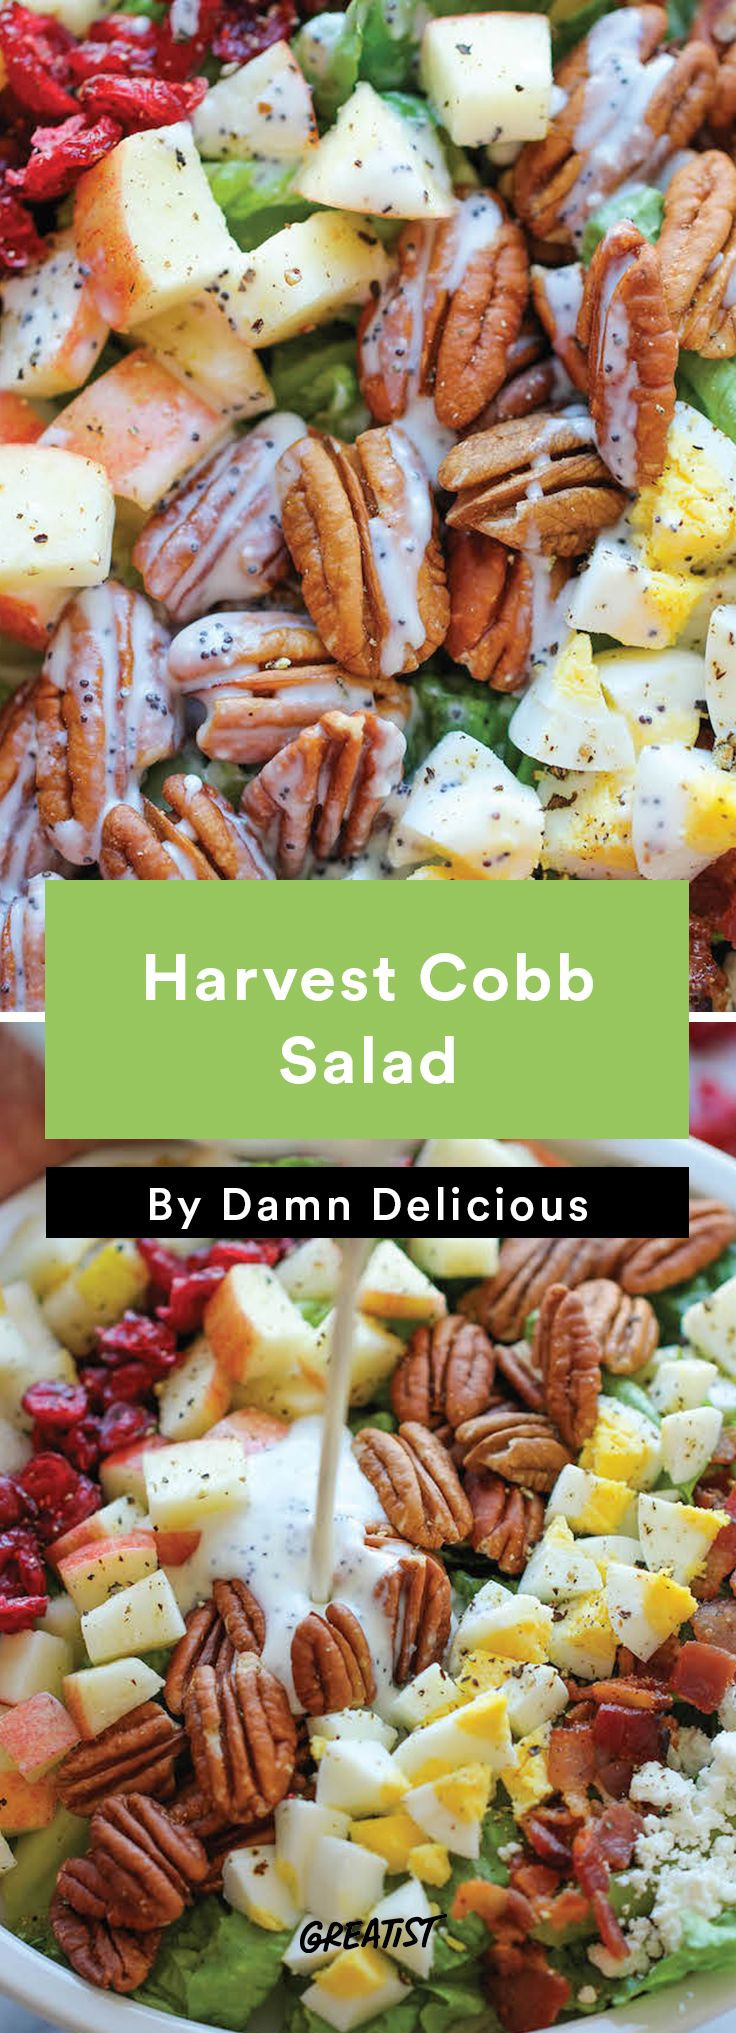 Healthy Fall Salads
 Best 25 Fall dinner recipes ideas on Pinterest